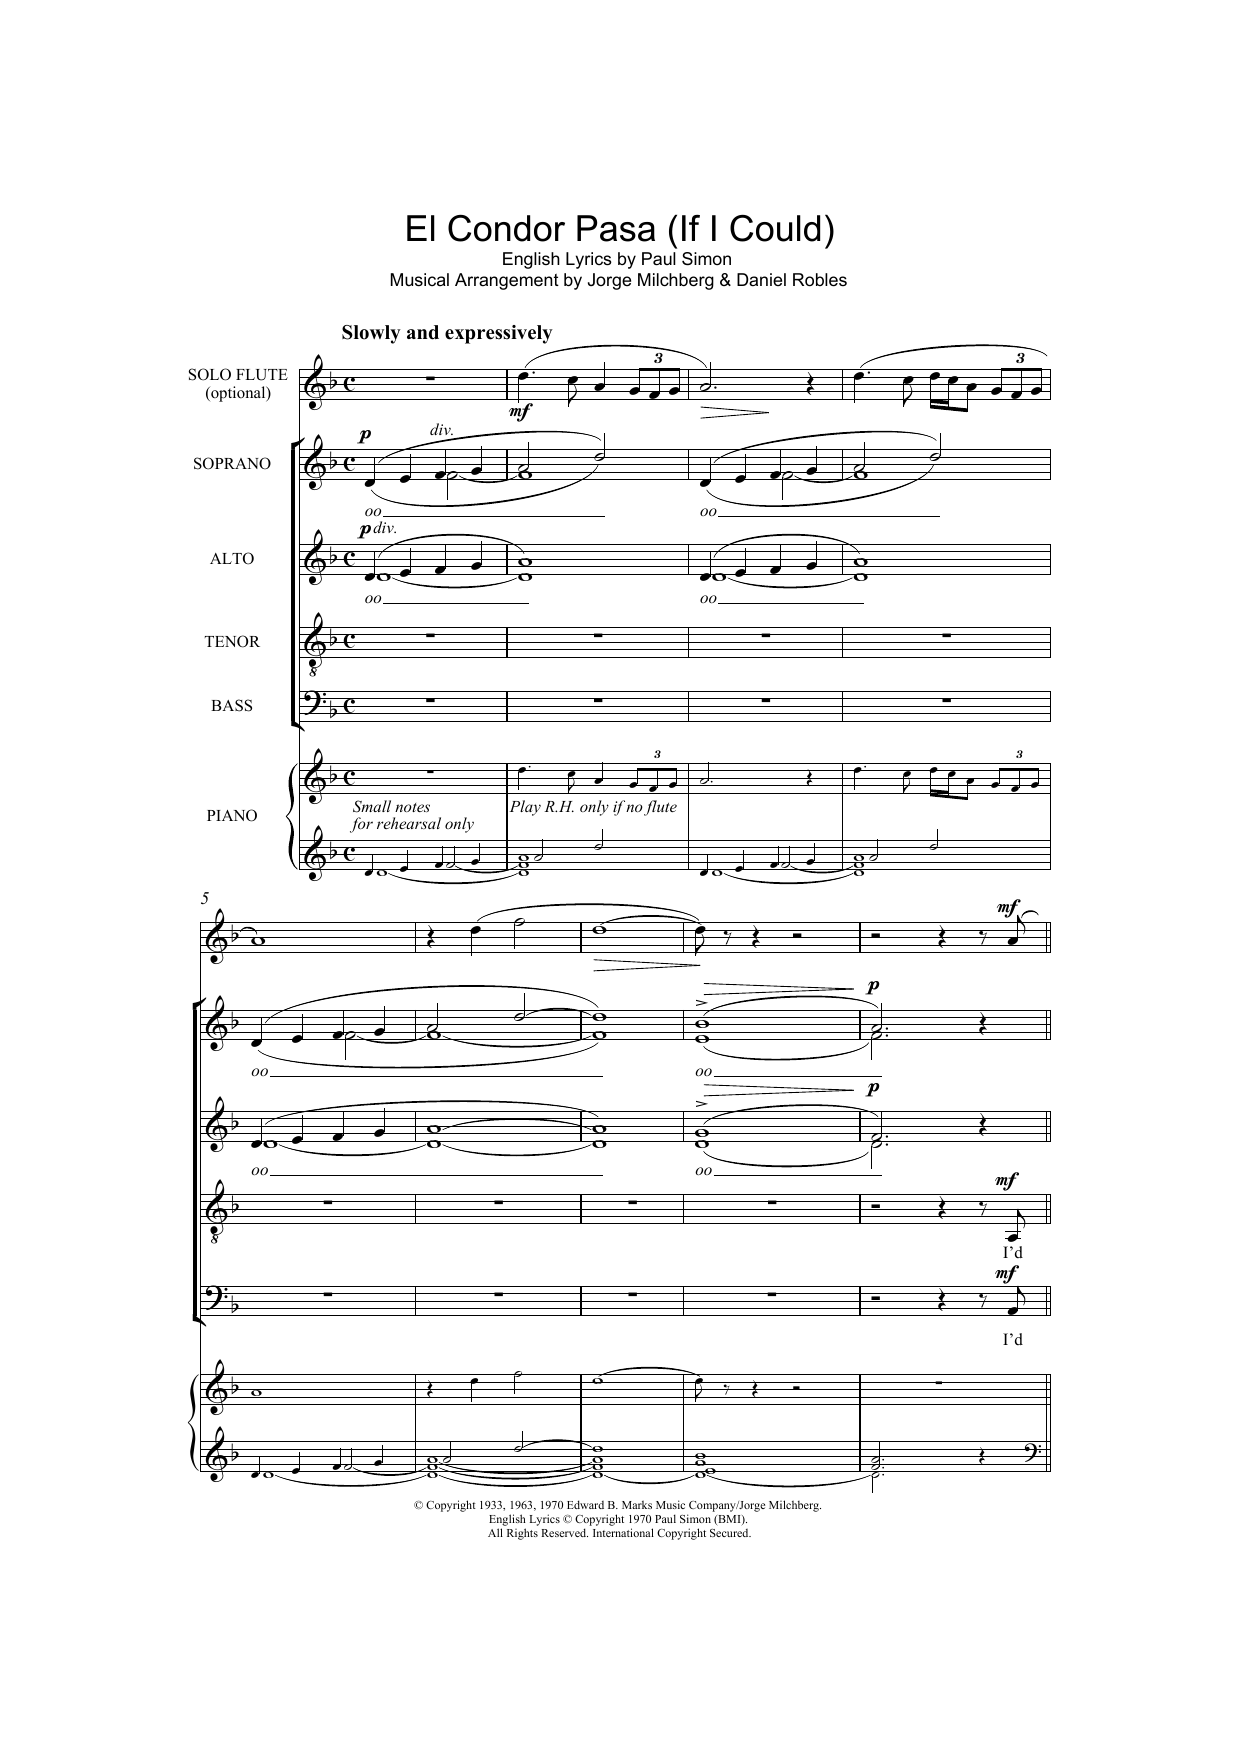 Simon & Garfunkel El Condor Pasa (If I Could) (arr. William Reed) Sheet Music Notes & Chords for SATB - Download or Print PDF